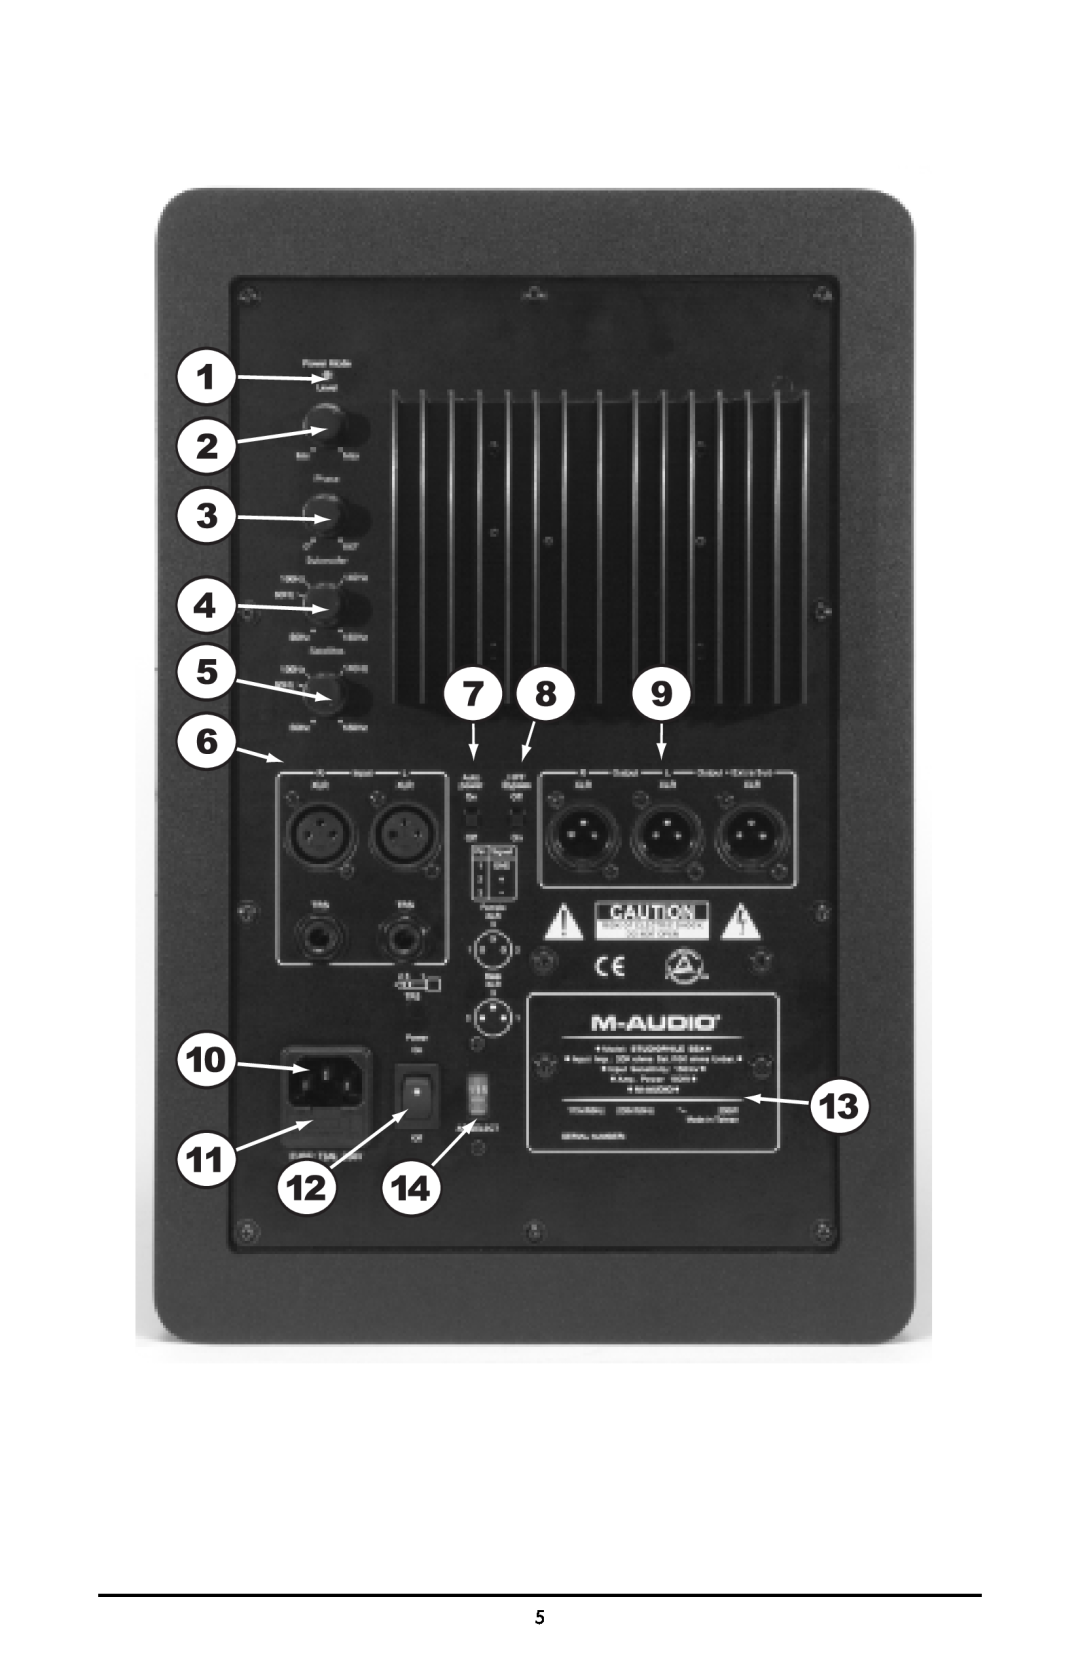 M-Audio SBX user manual 